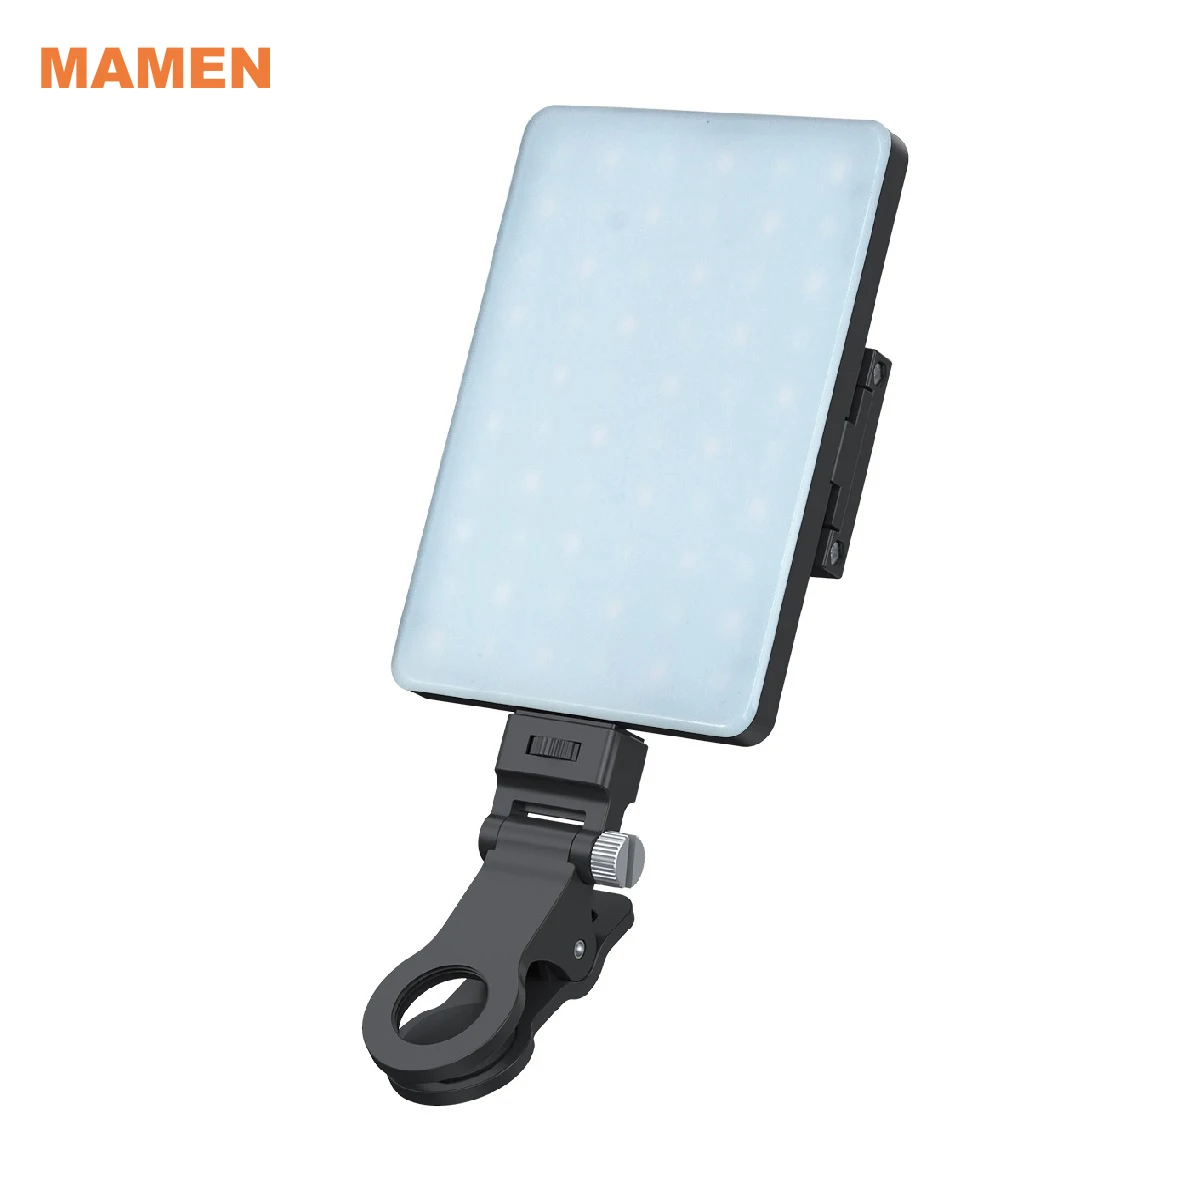 

Mamen Bi Color Conference Lighting Fill Photography Led Light Smartphone Clip Video LED Camera Light